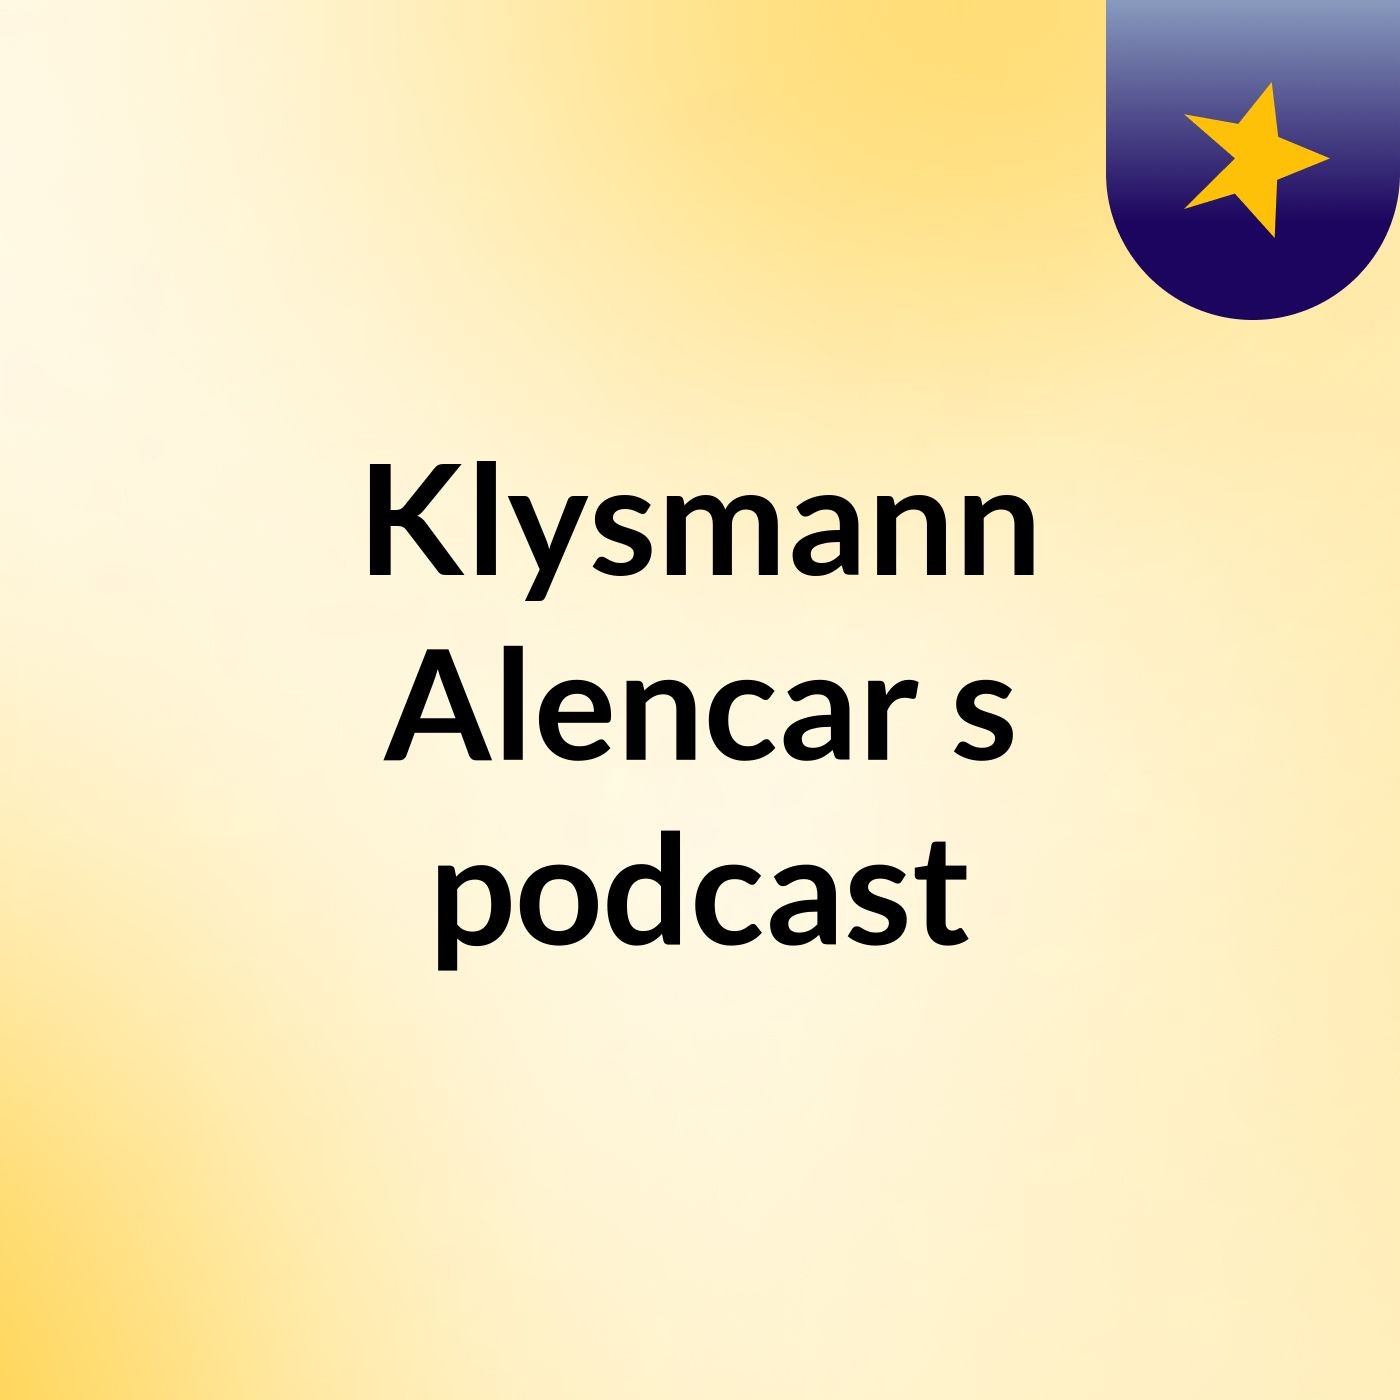 Klysmann Alencar's podcast